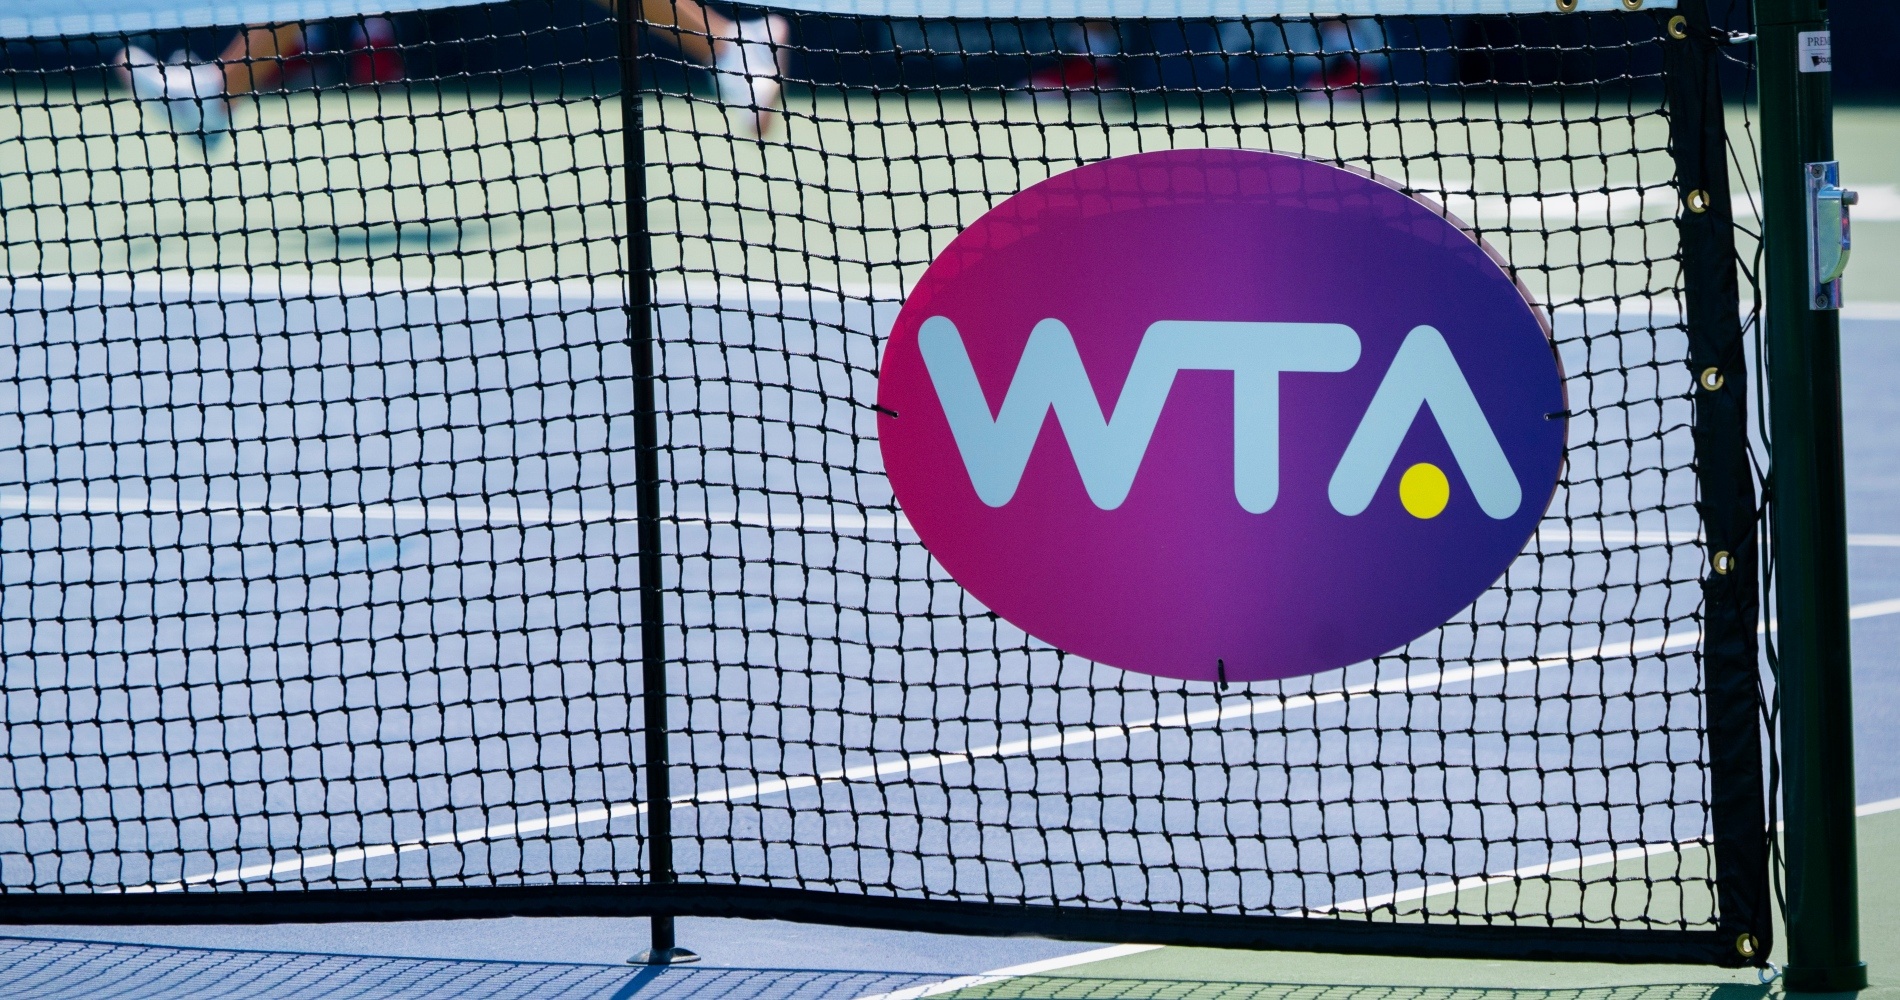 ATP/WTA Tennis Tournaments Explained 